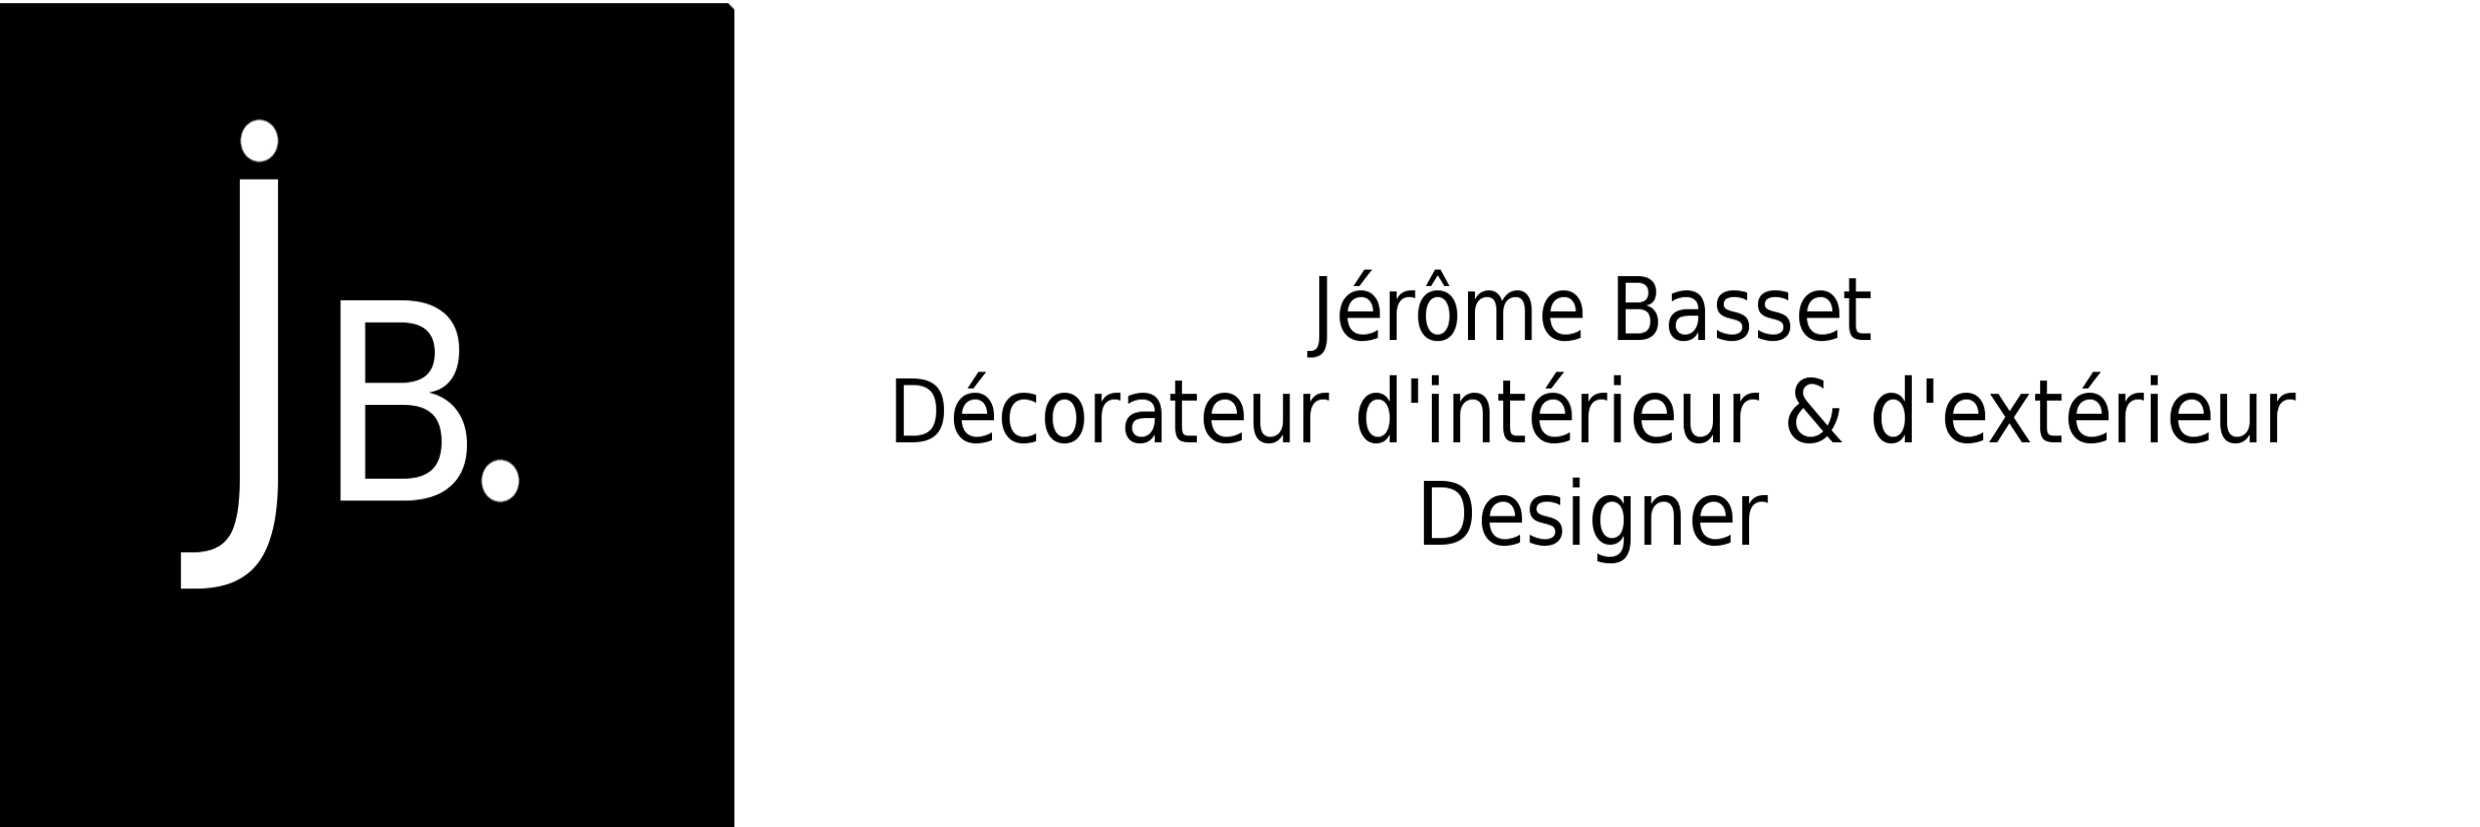 JeromeBASSET_architecte.jpg